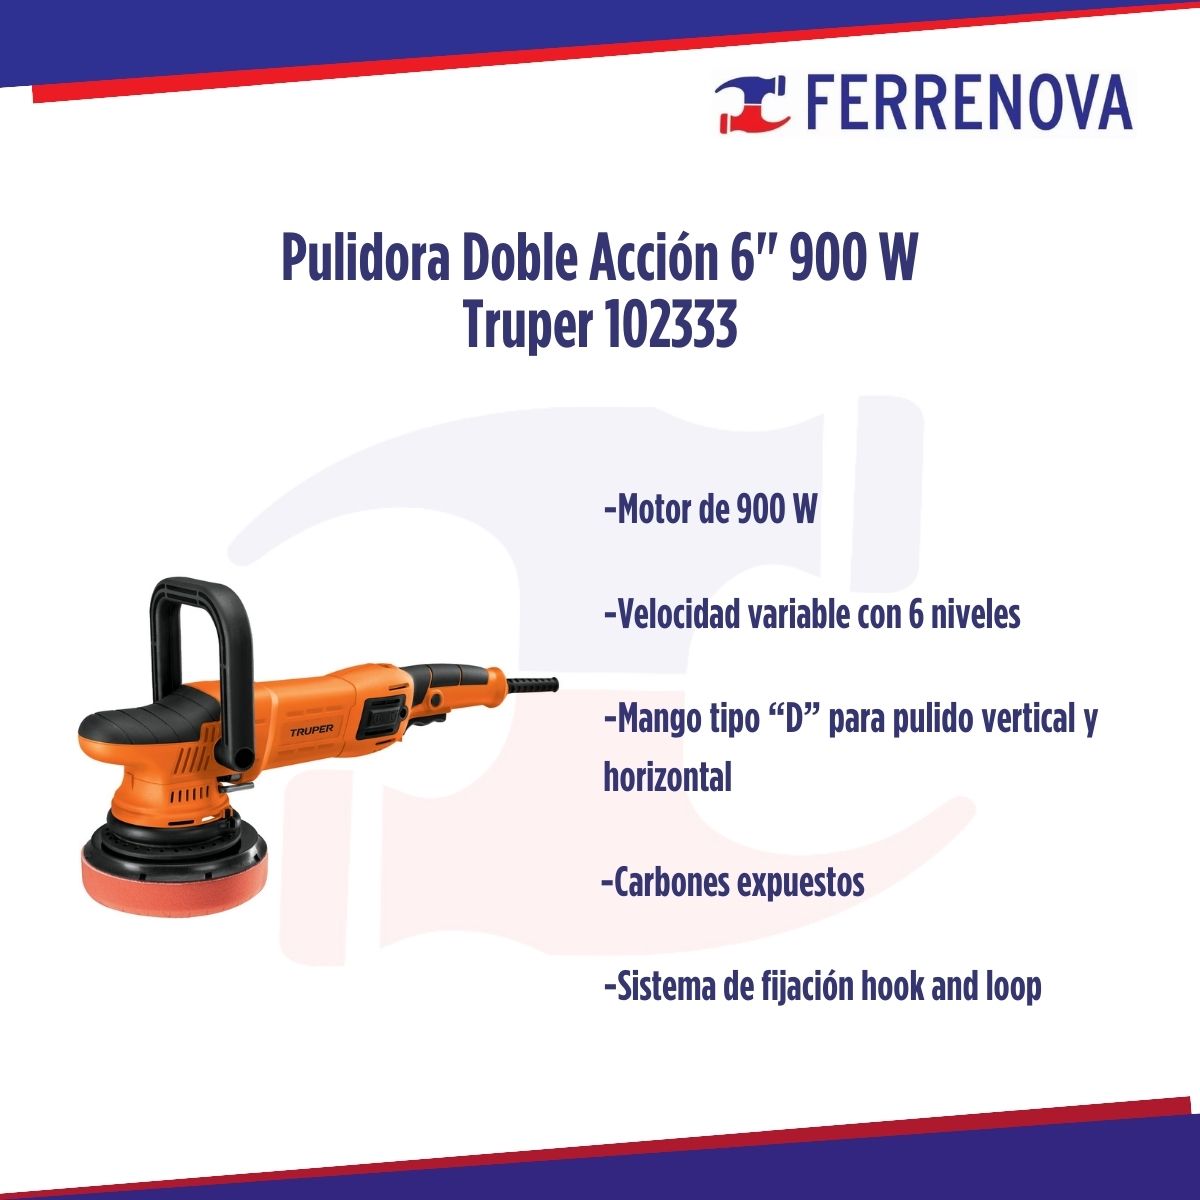 Pulidora Doble Acción 6" 900 W Truper 102333